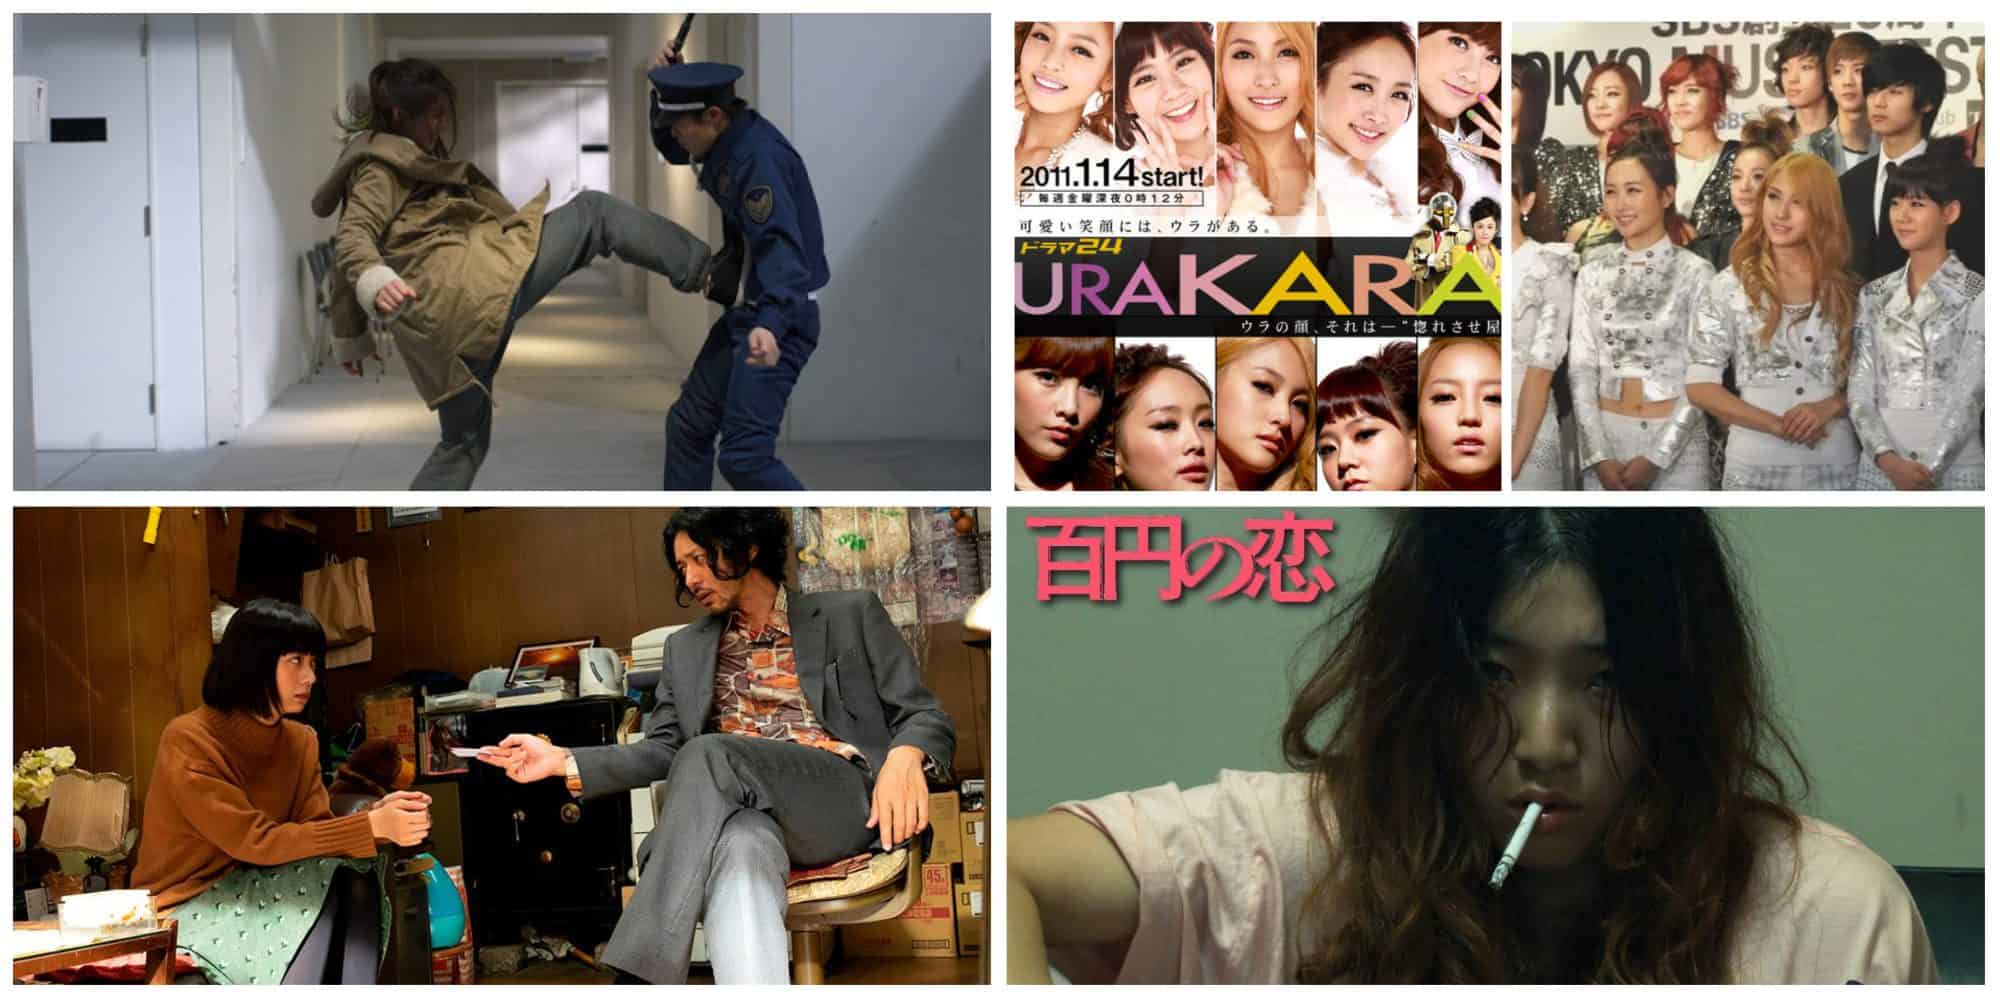 Top Spy Japanese Drama to watch